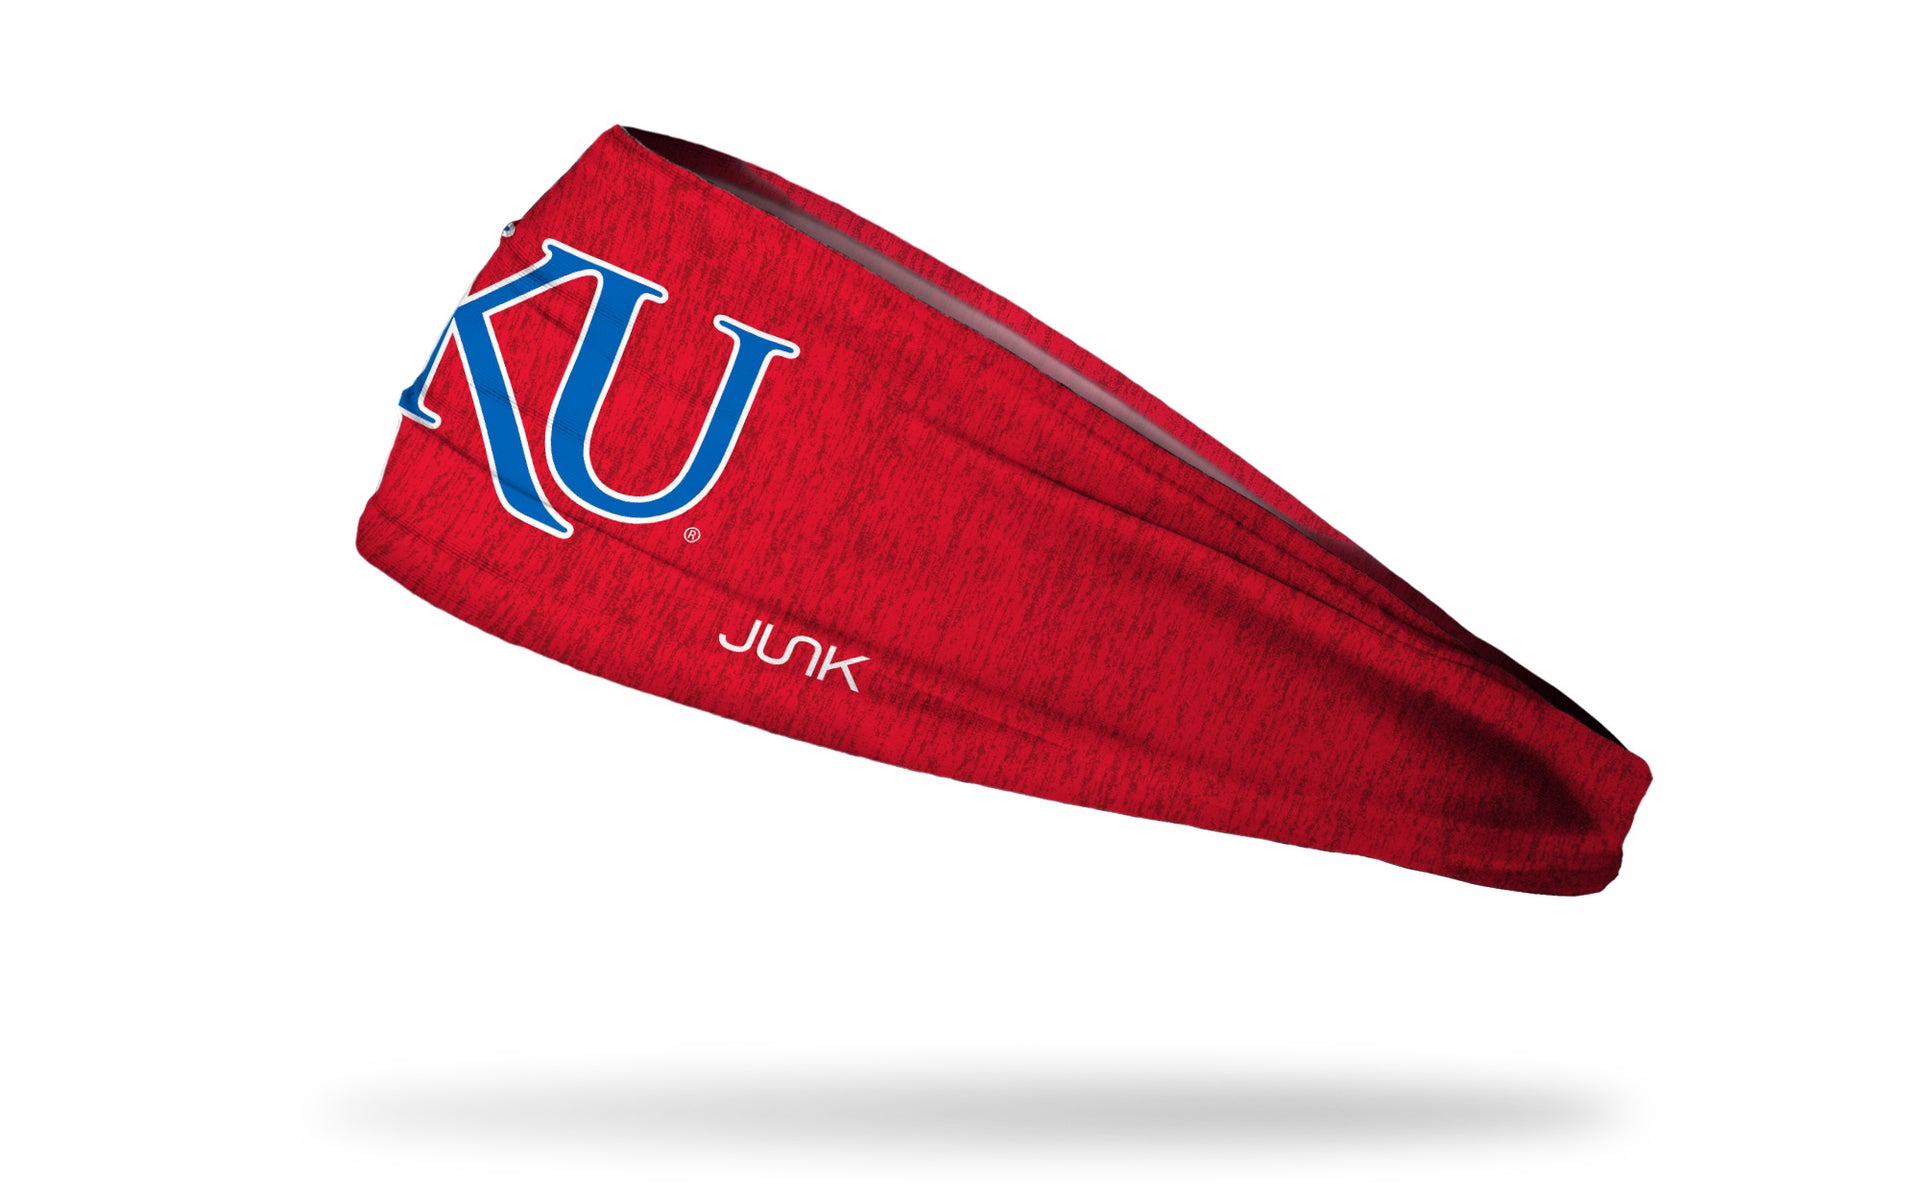 red heathered headband with University of Kansas K U logo in white and royal blue